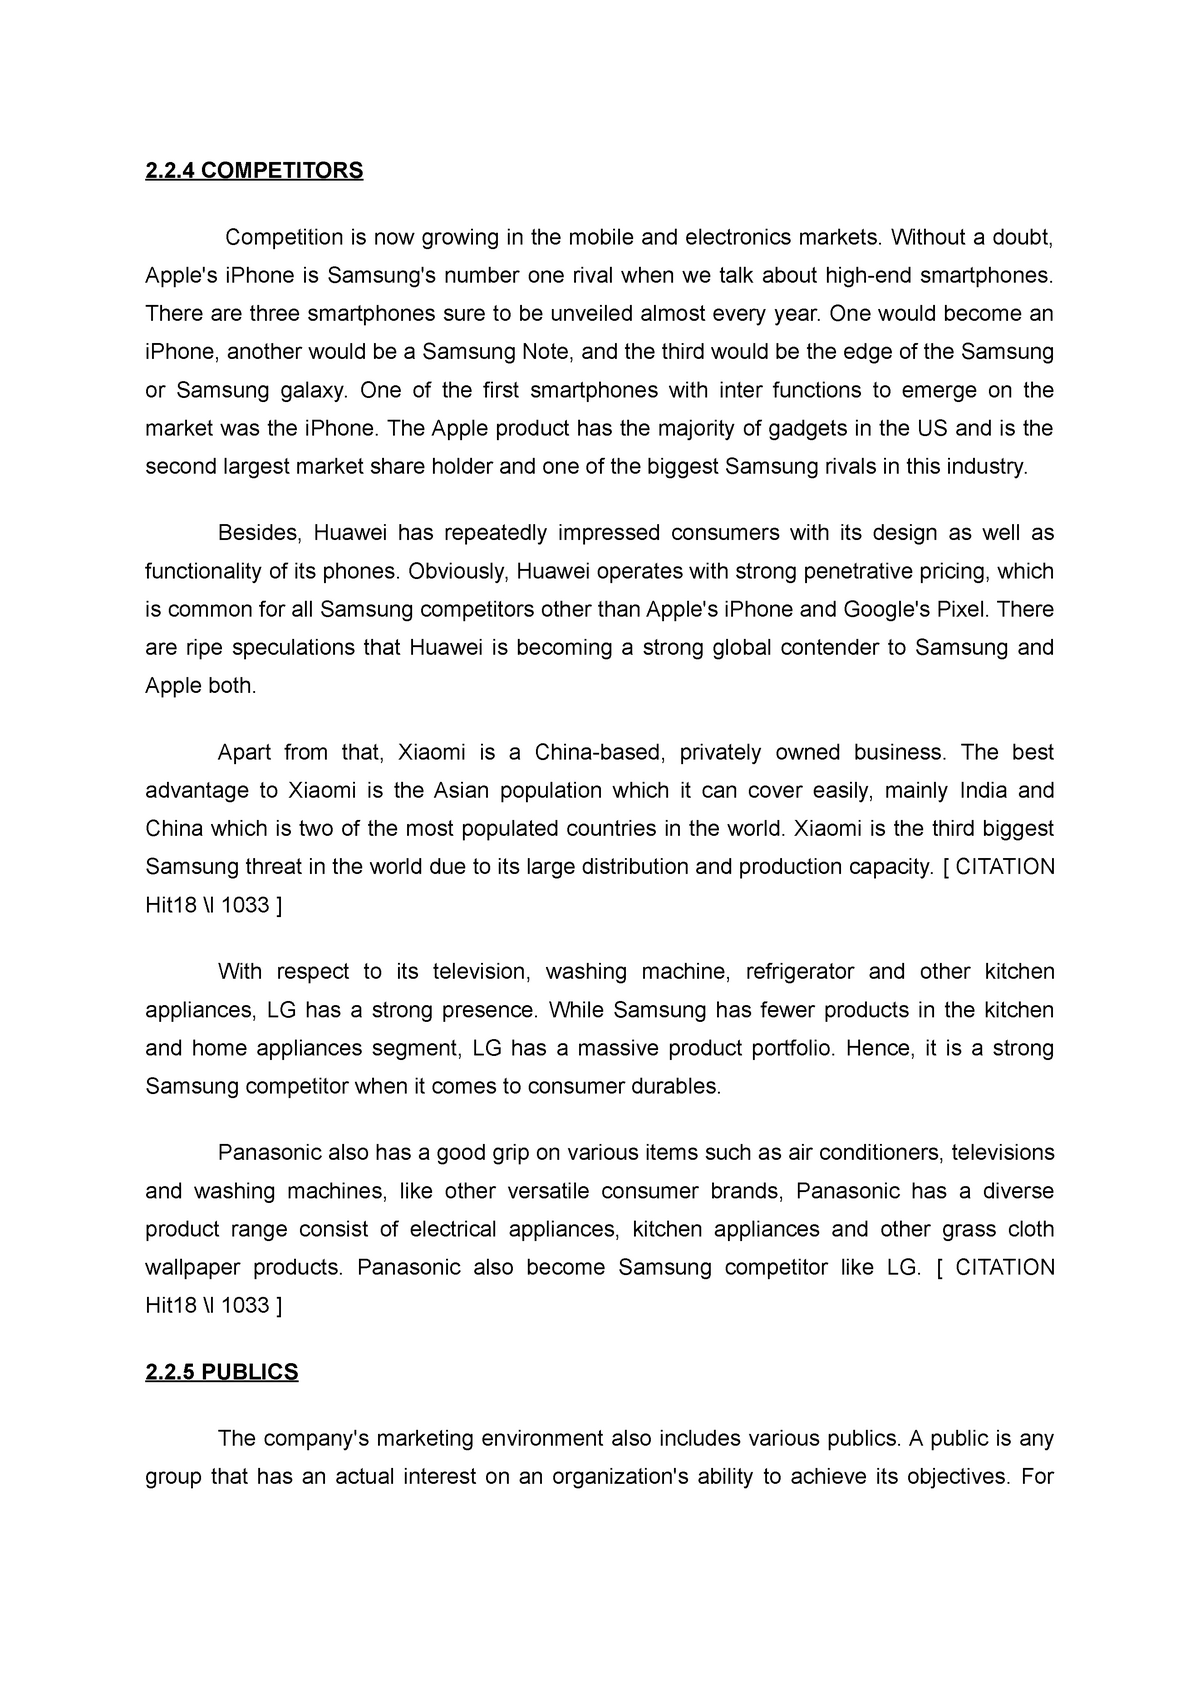 micro environment essay grade 10 pdf